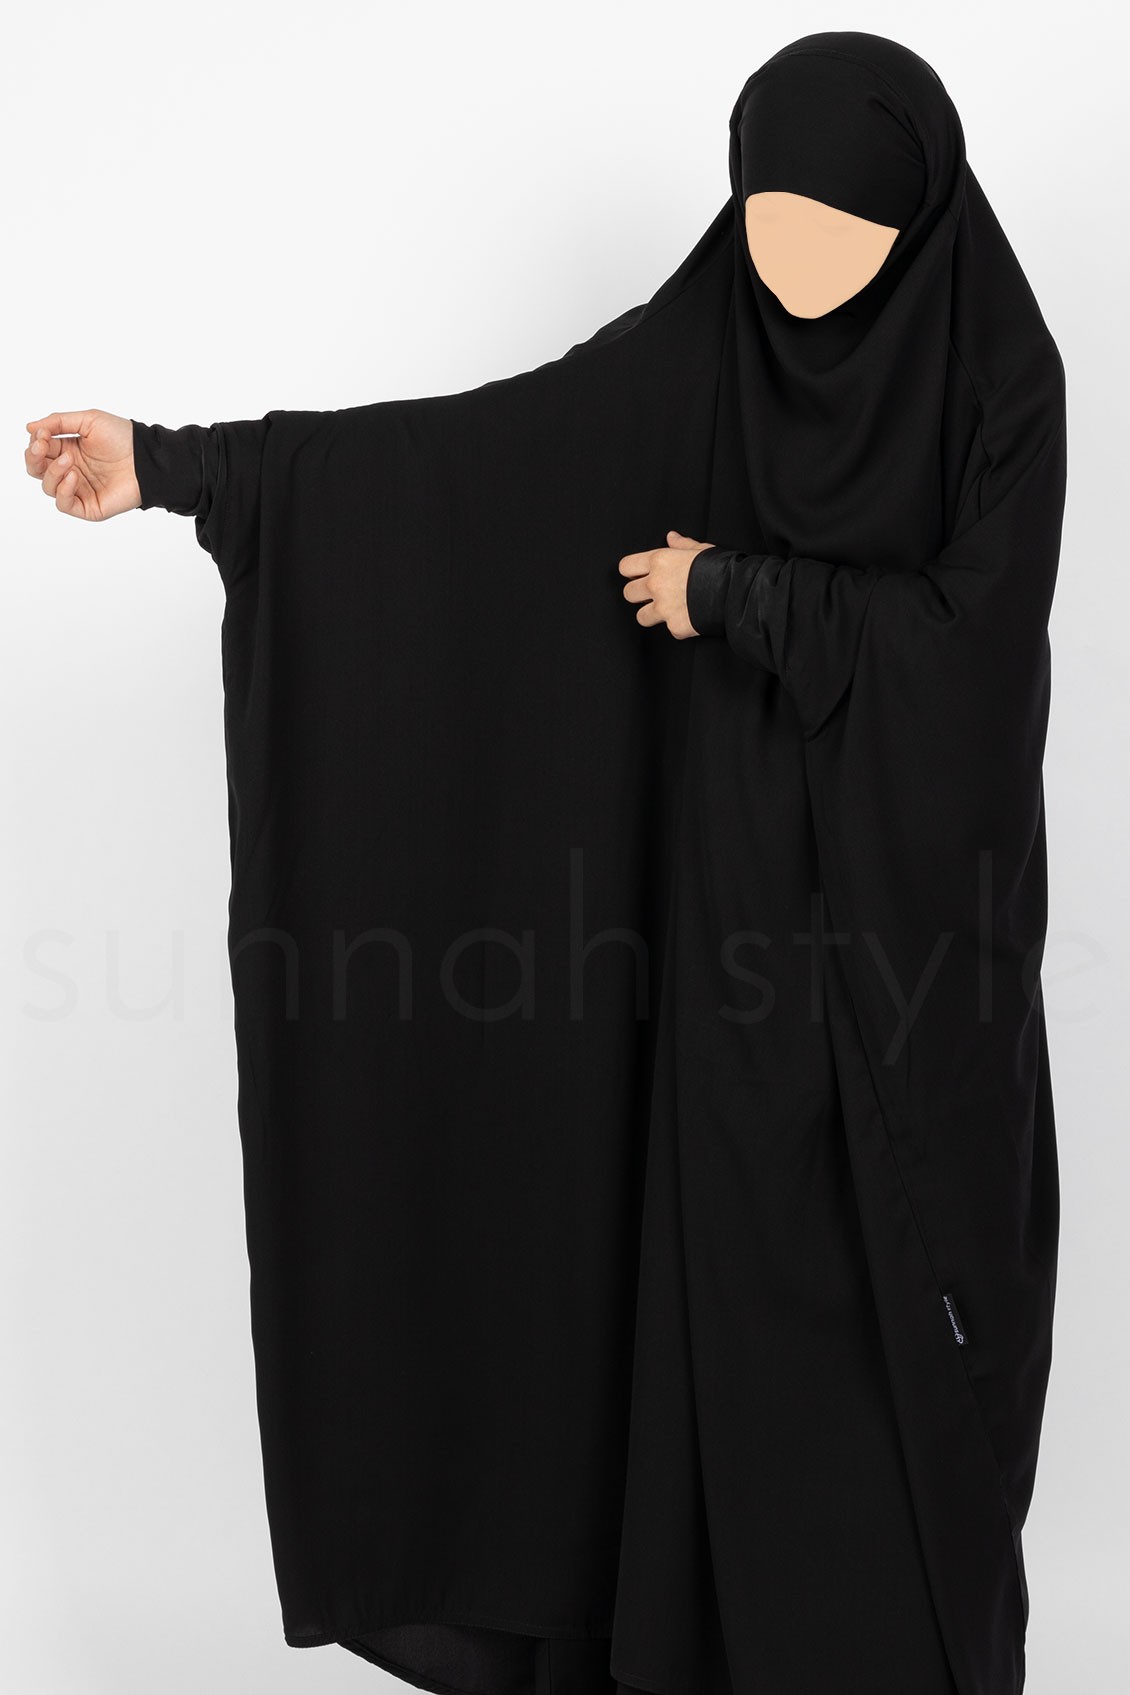 Sunnah Style Girls Plain Full Length Jilbab Black